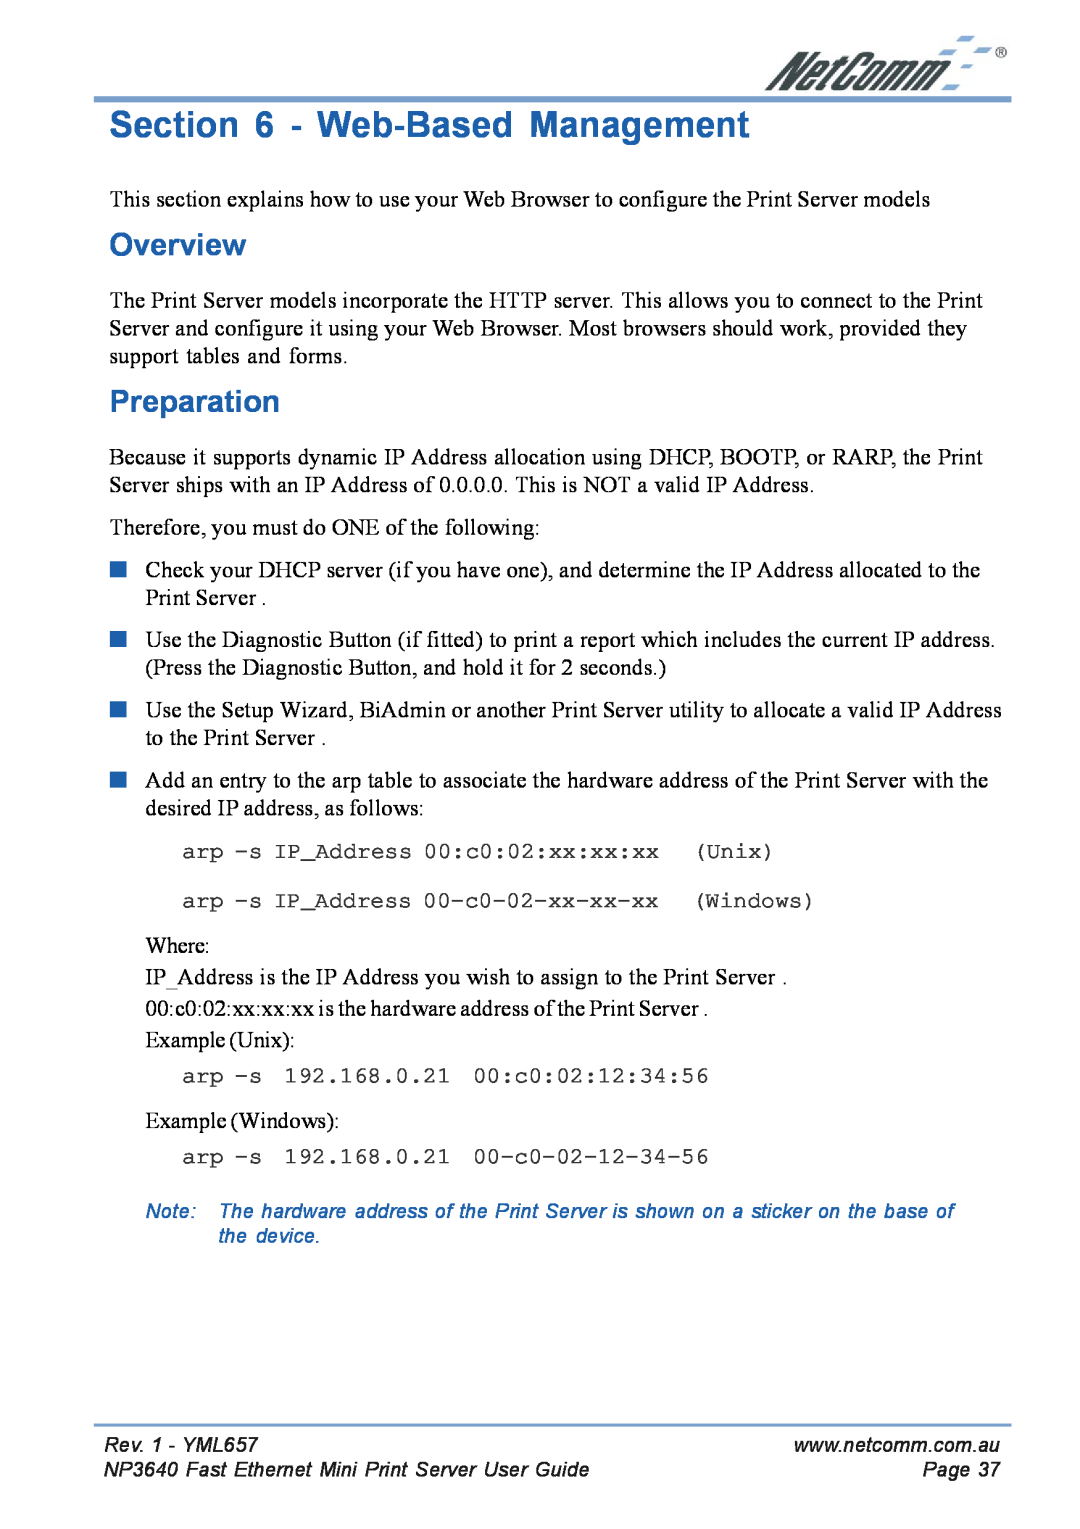 NetComm NP3640 manual Web-Based Management, Preparation, Overview, arp -s IPAddress 00c002xxxxxx Unix 